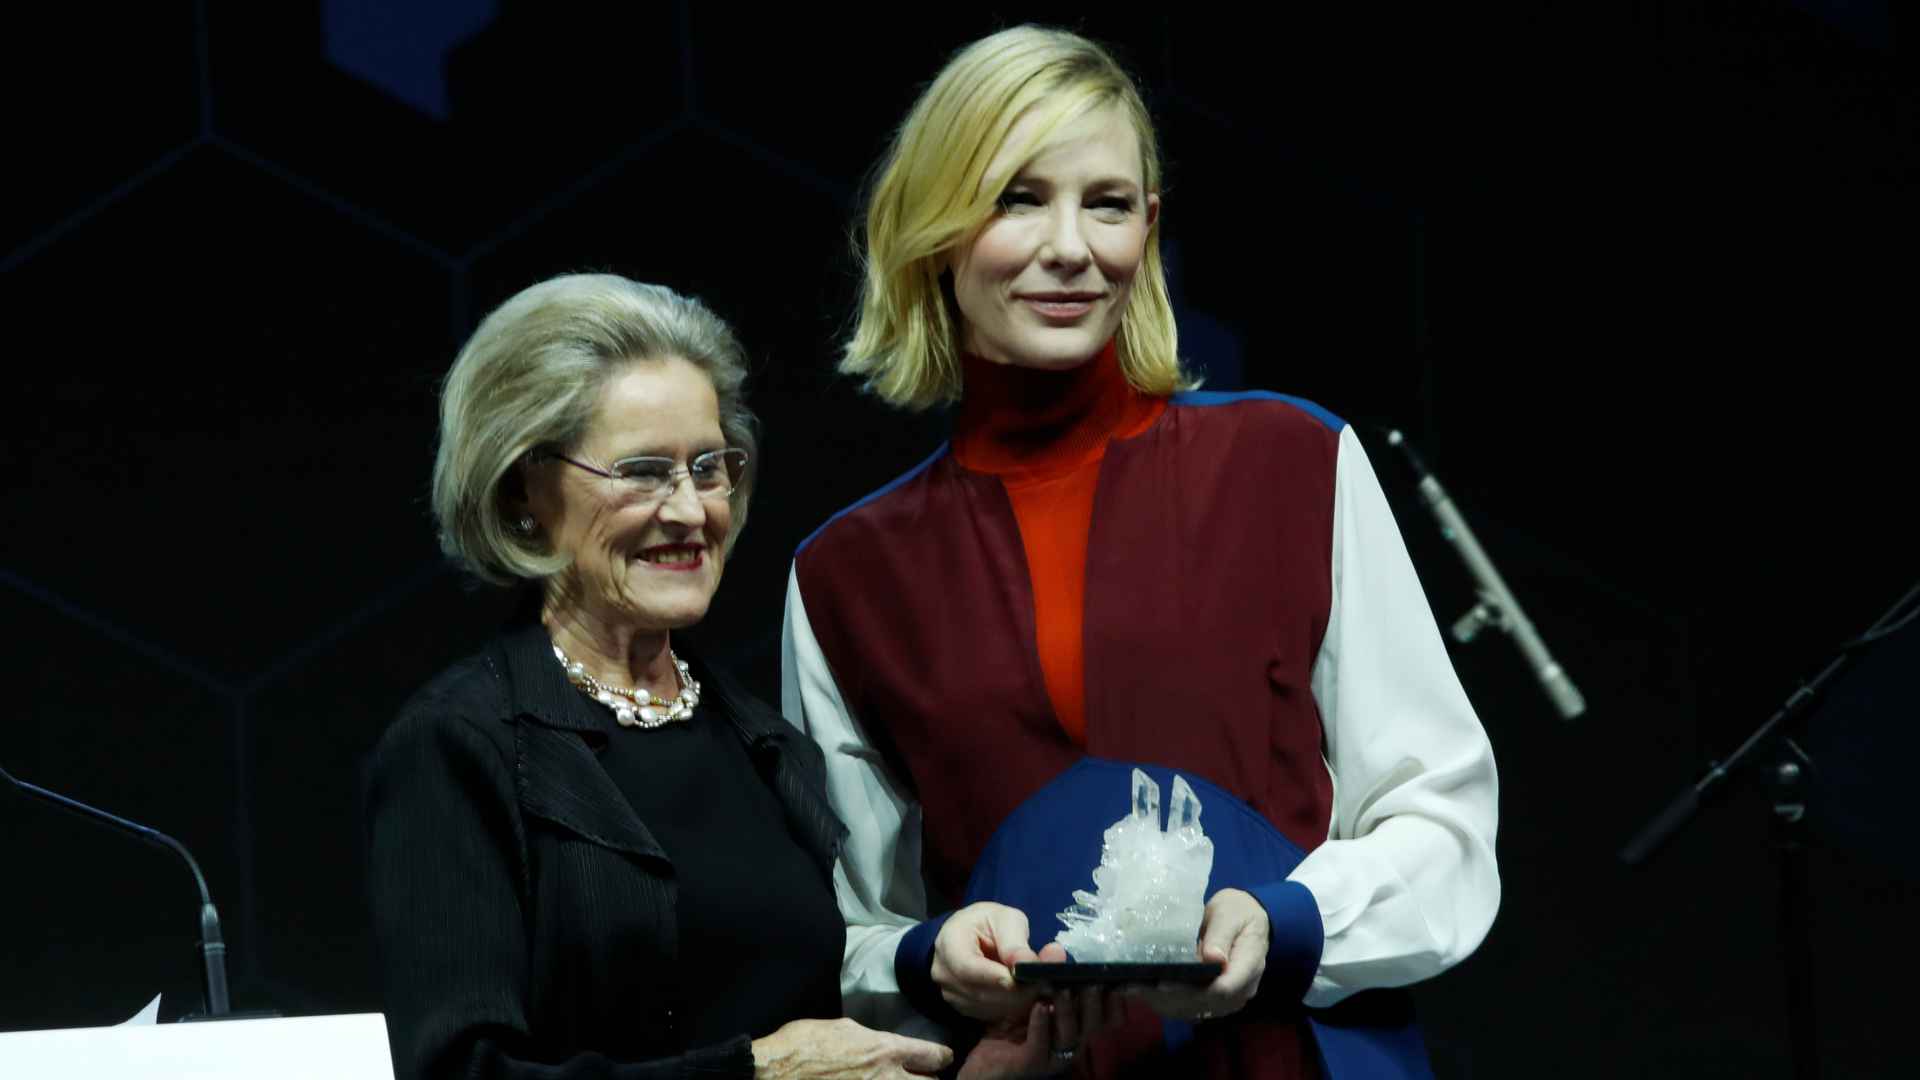 ¿Por qué Davos 2018 ha premiado a Cate Blanchett?